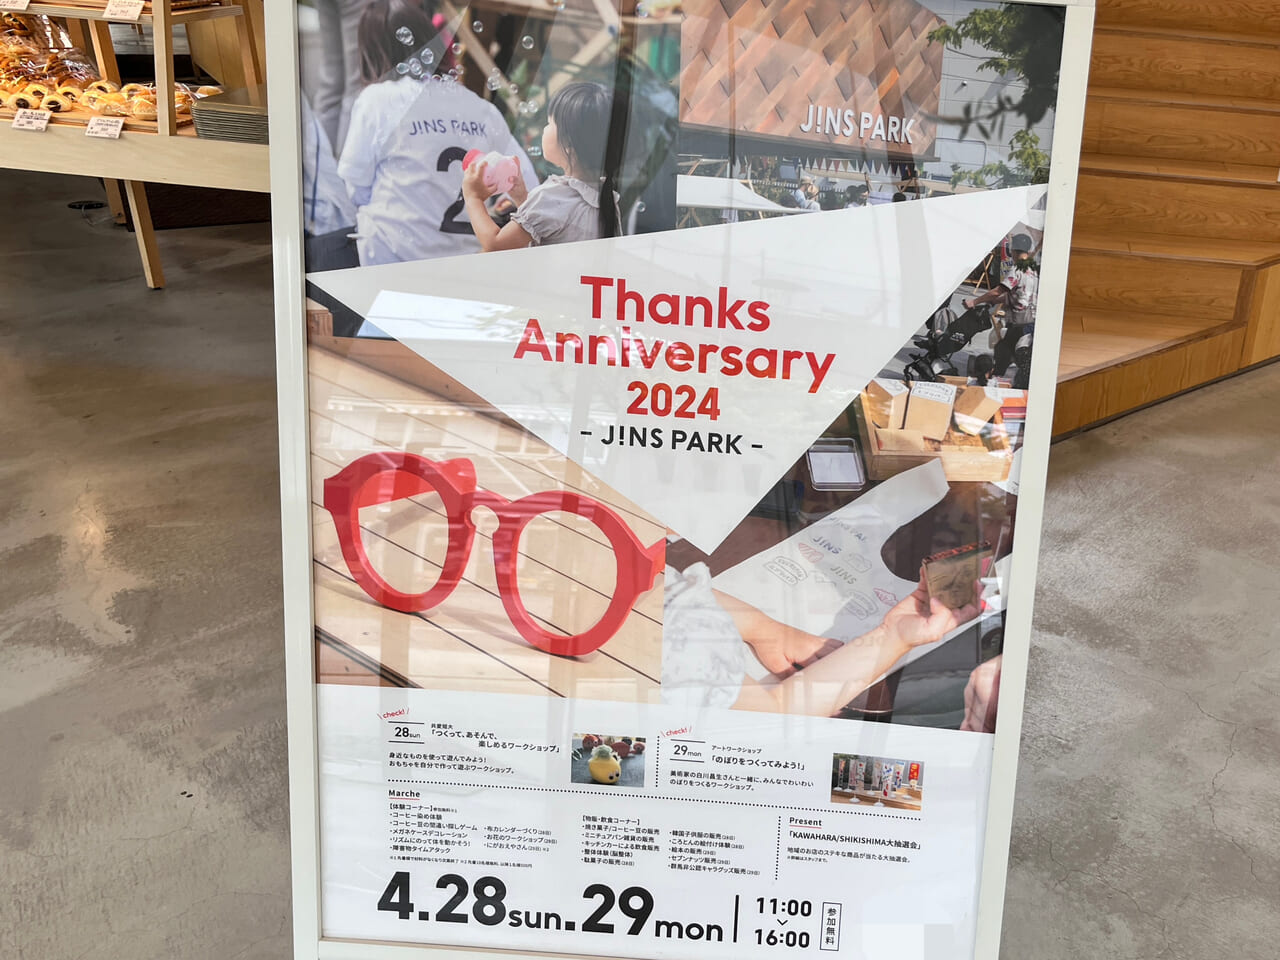 「Thanks Anniversary 2024」開催告知のポスター